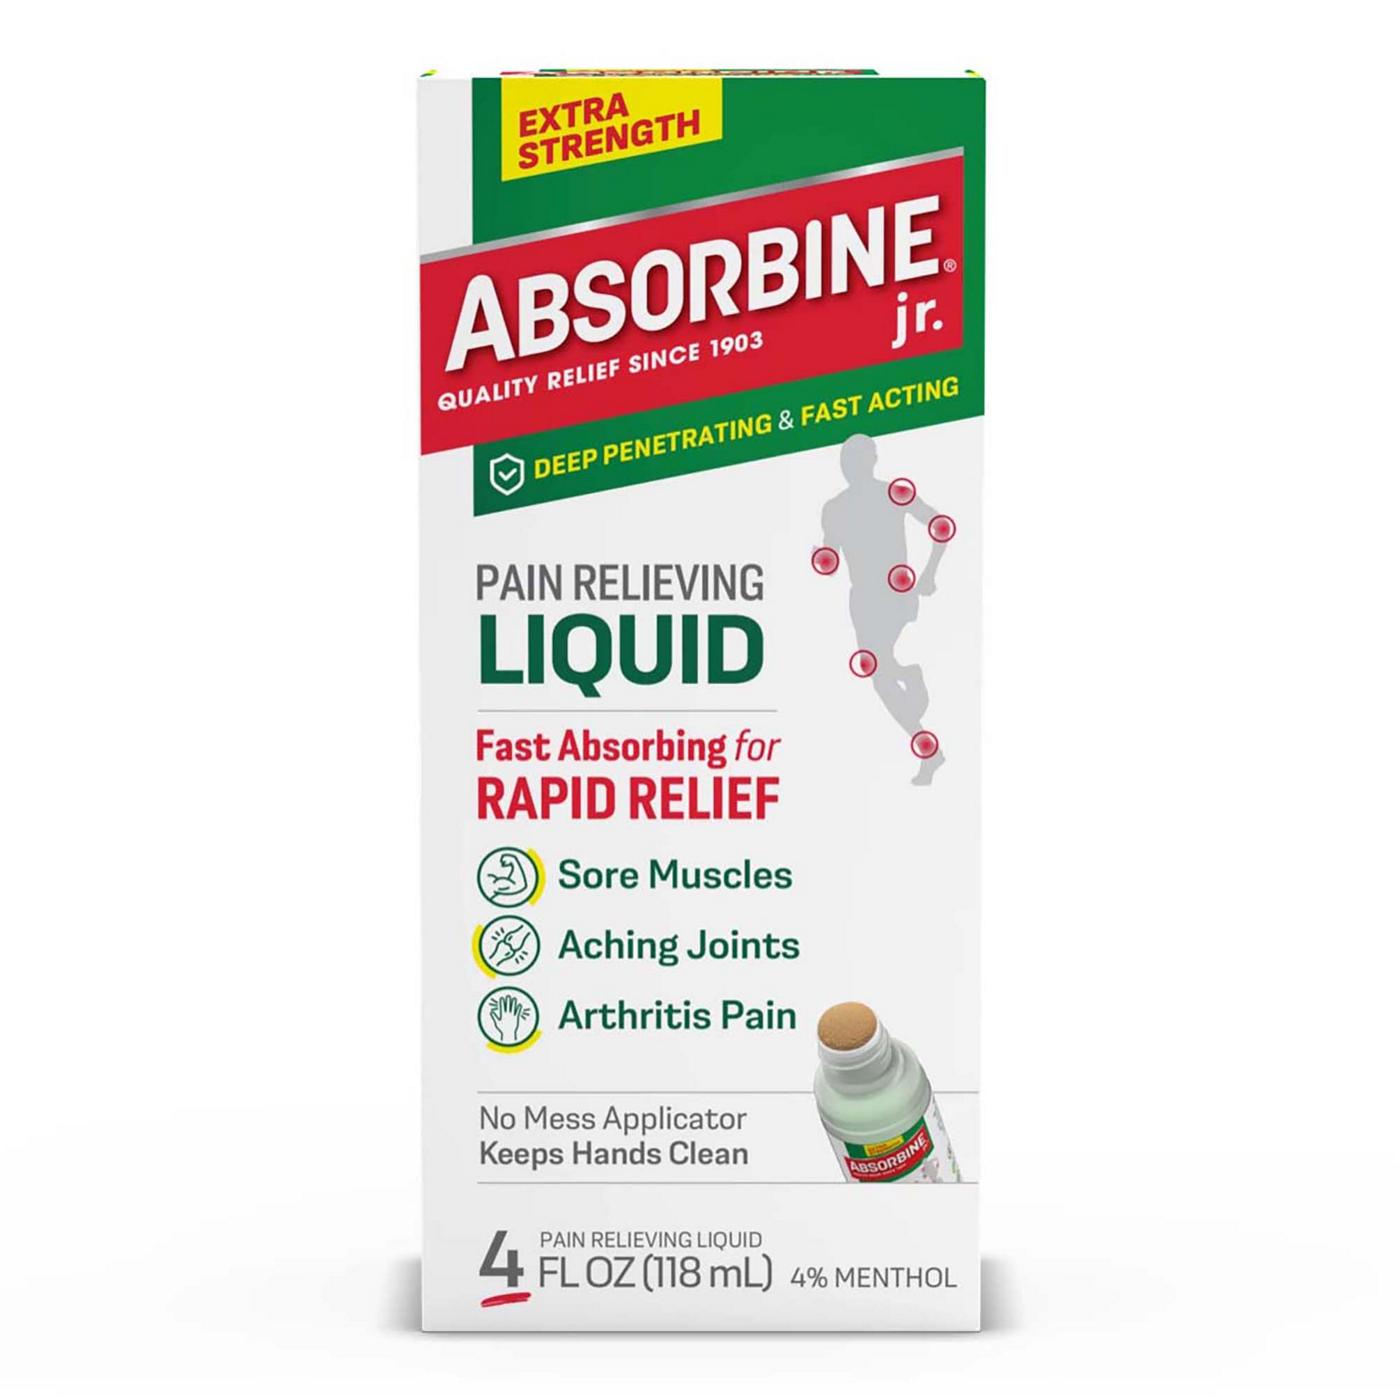 Absorbine Jr. Plus Pain Relieving Liquid Extra Strength Formula; image 1 of 3